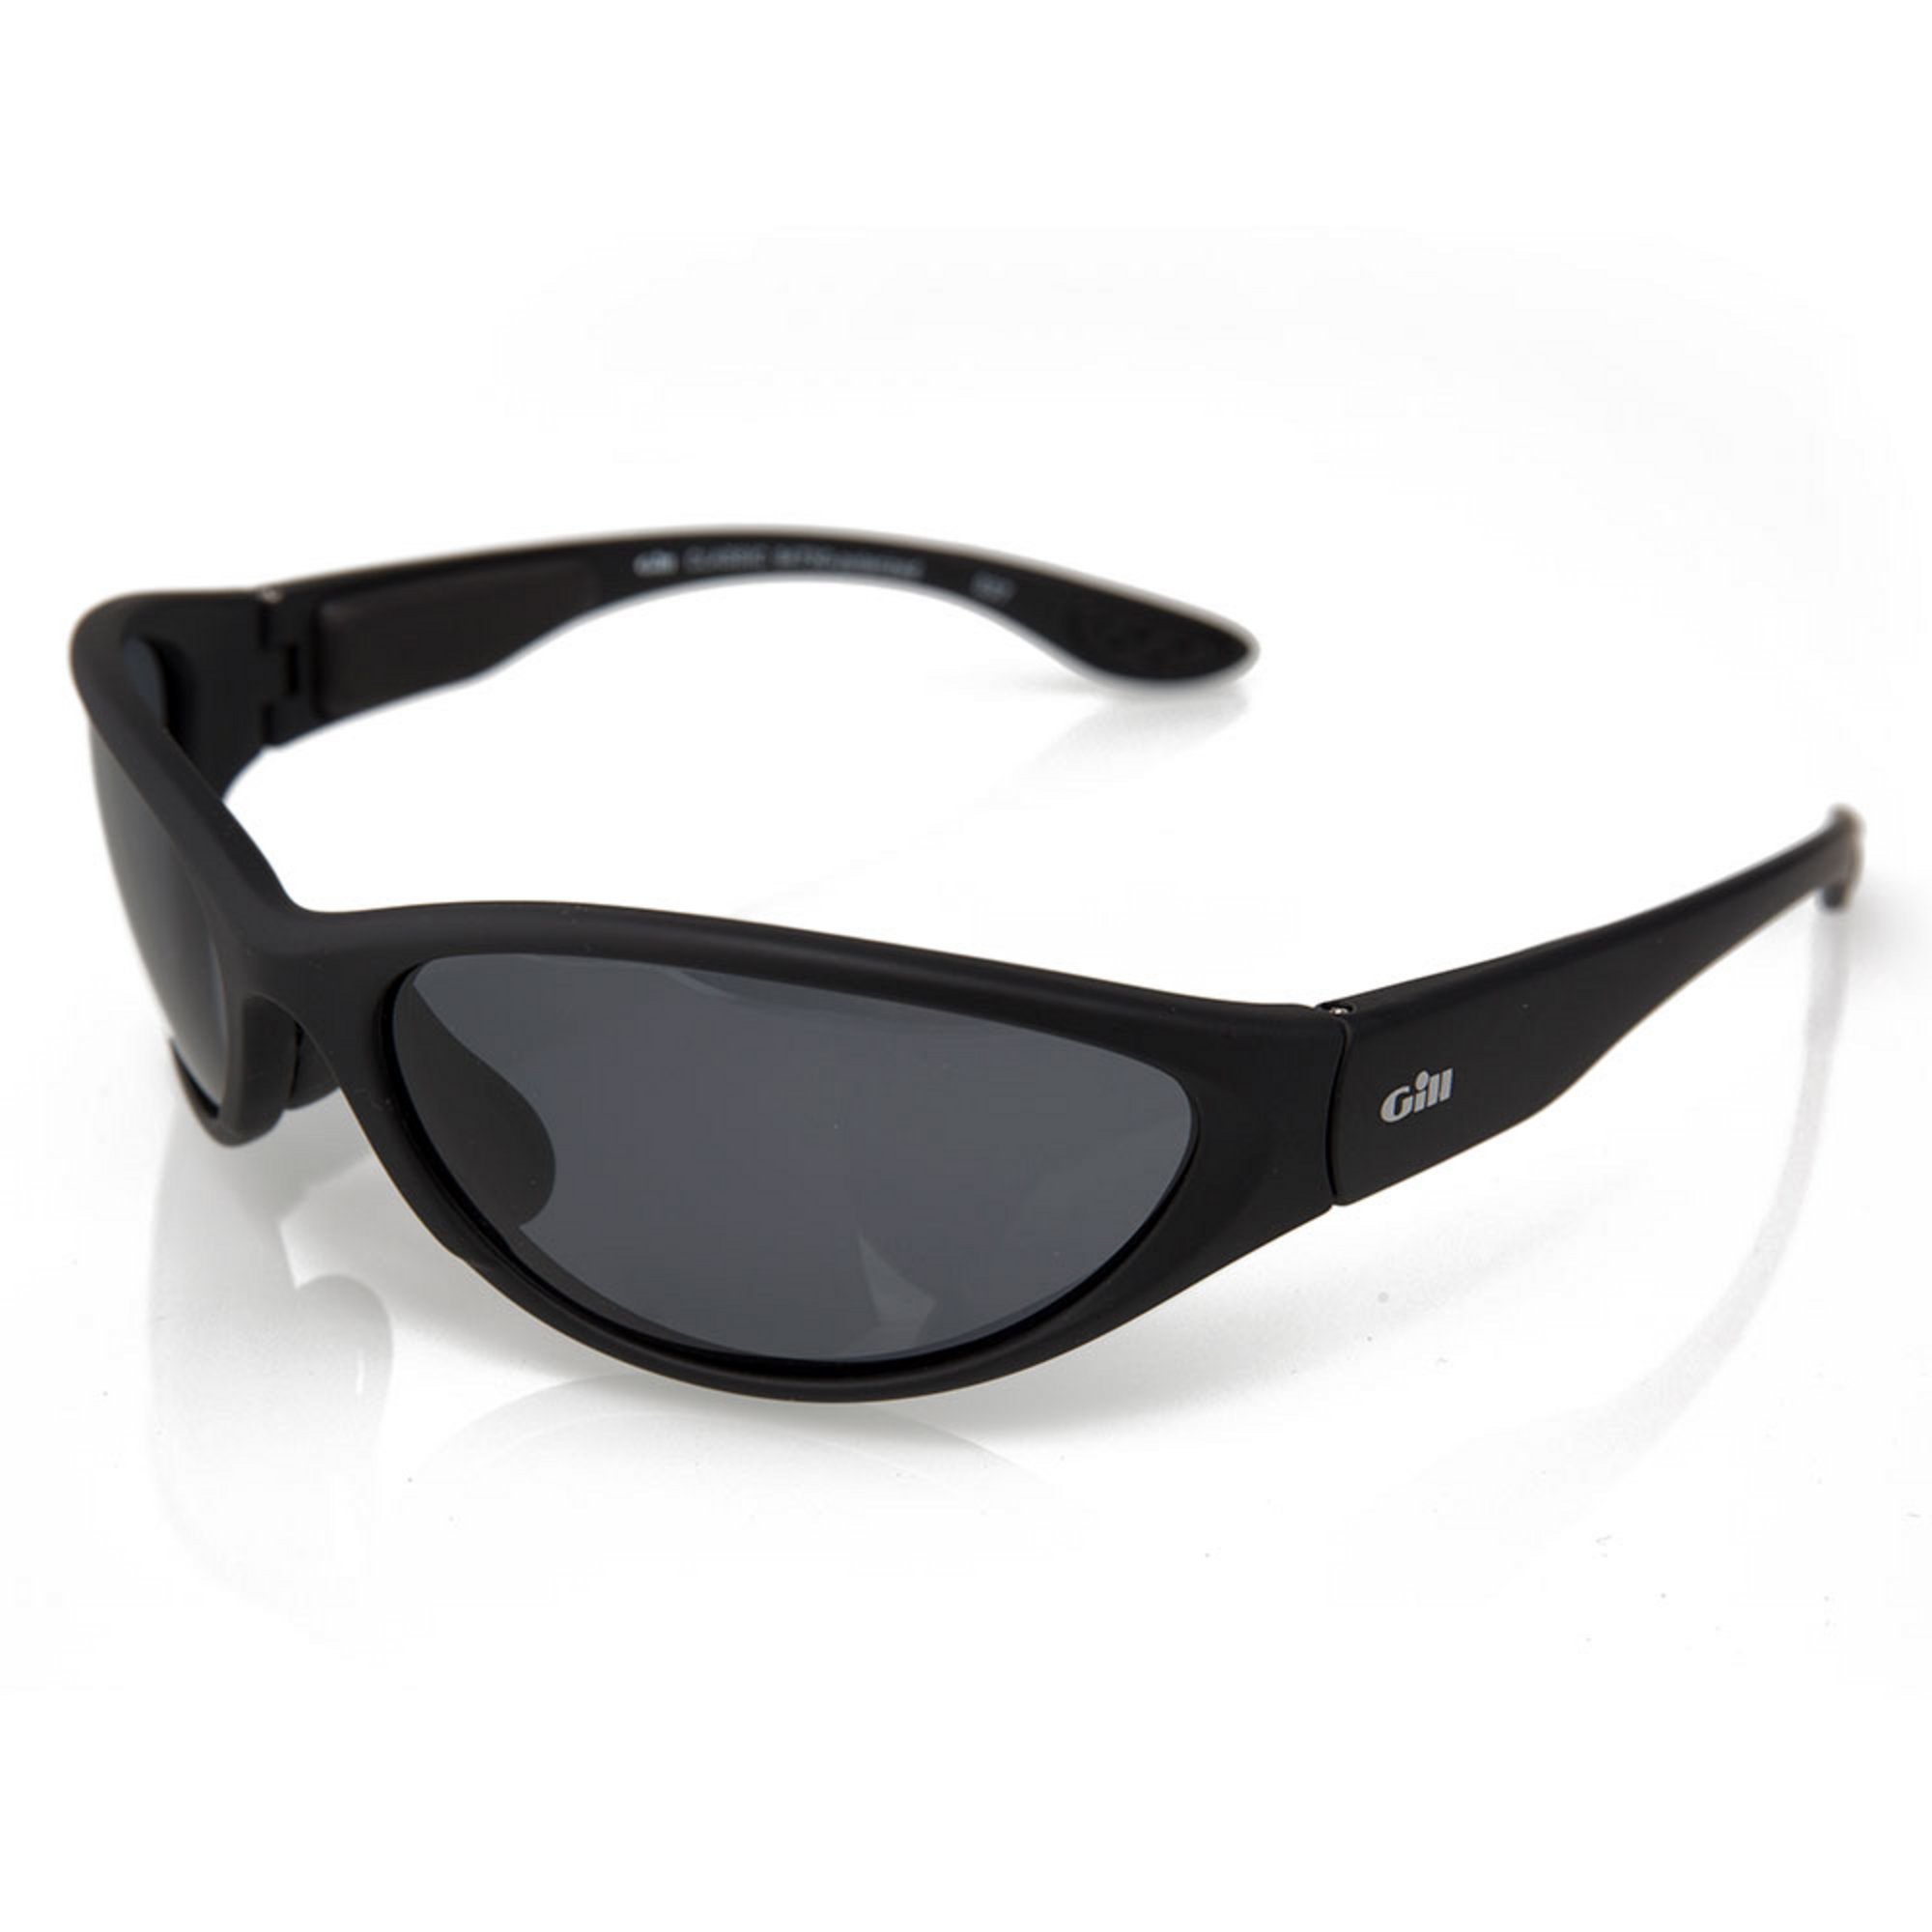 Gill Classic Sunglasses polarised, - floatable, UV protection